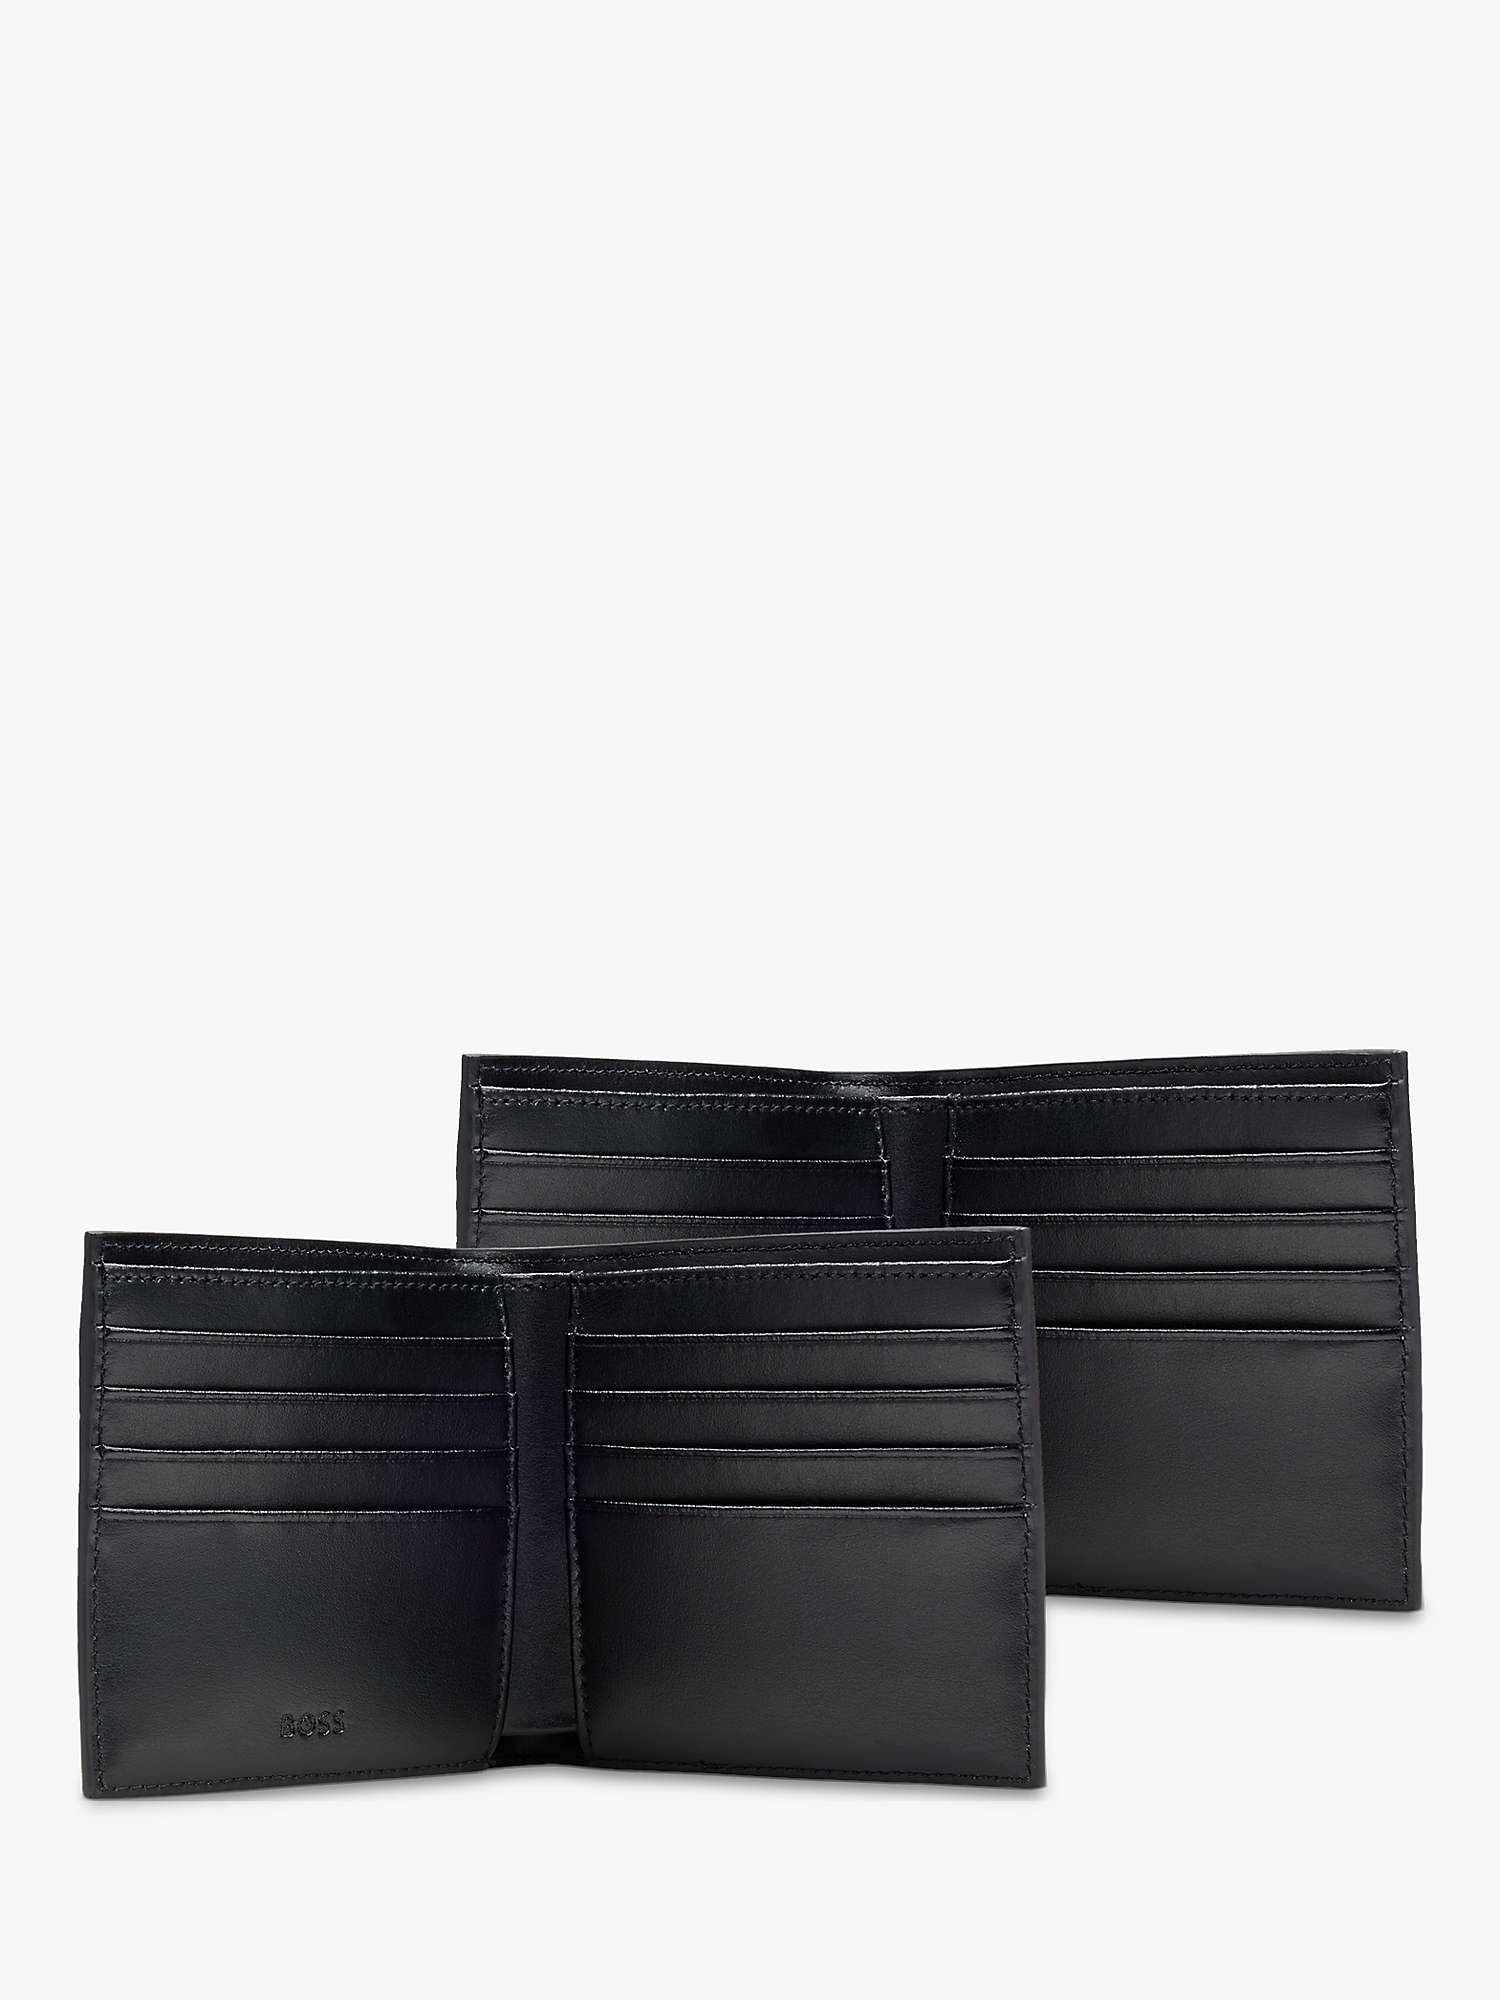 Buy BOSS Wallet Gift Box, Black Online at johnlewis.com